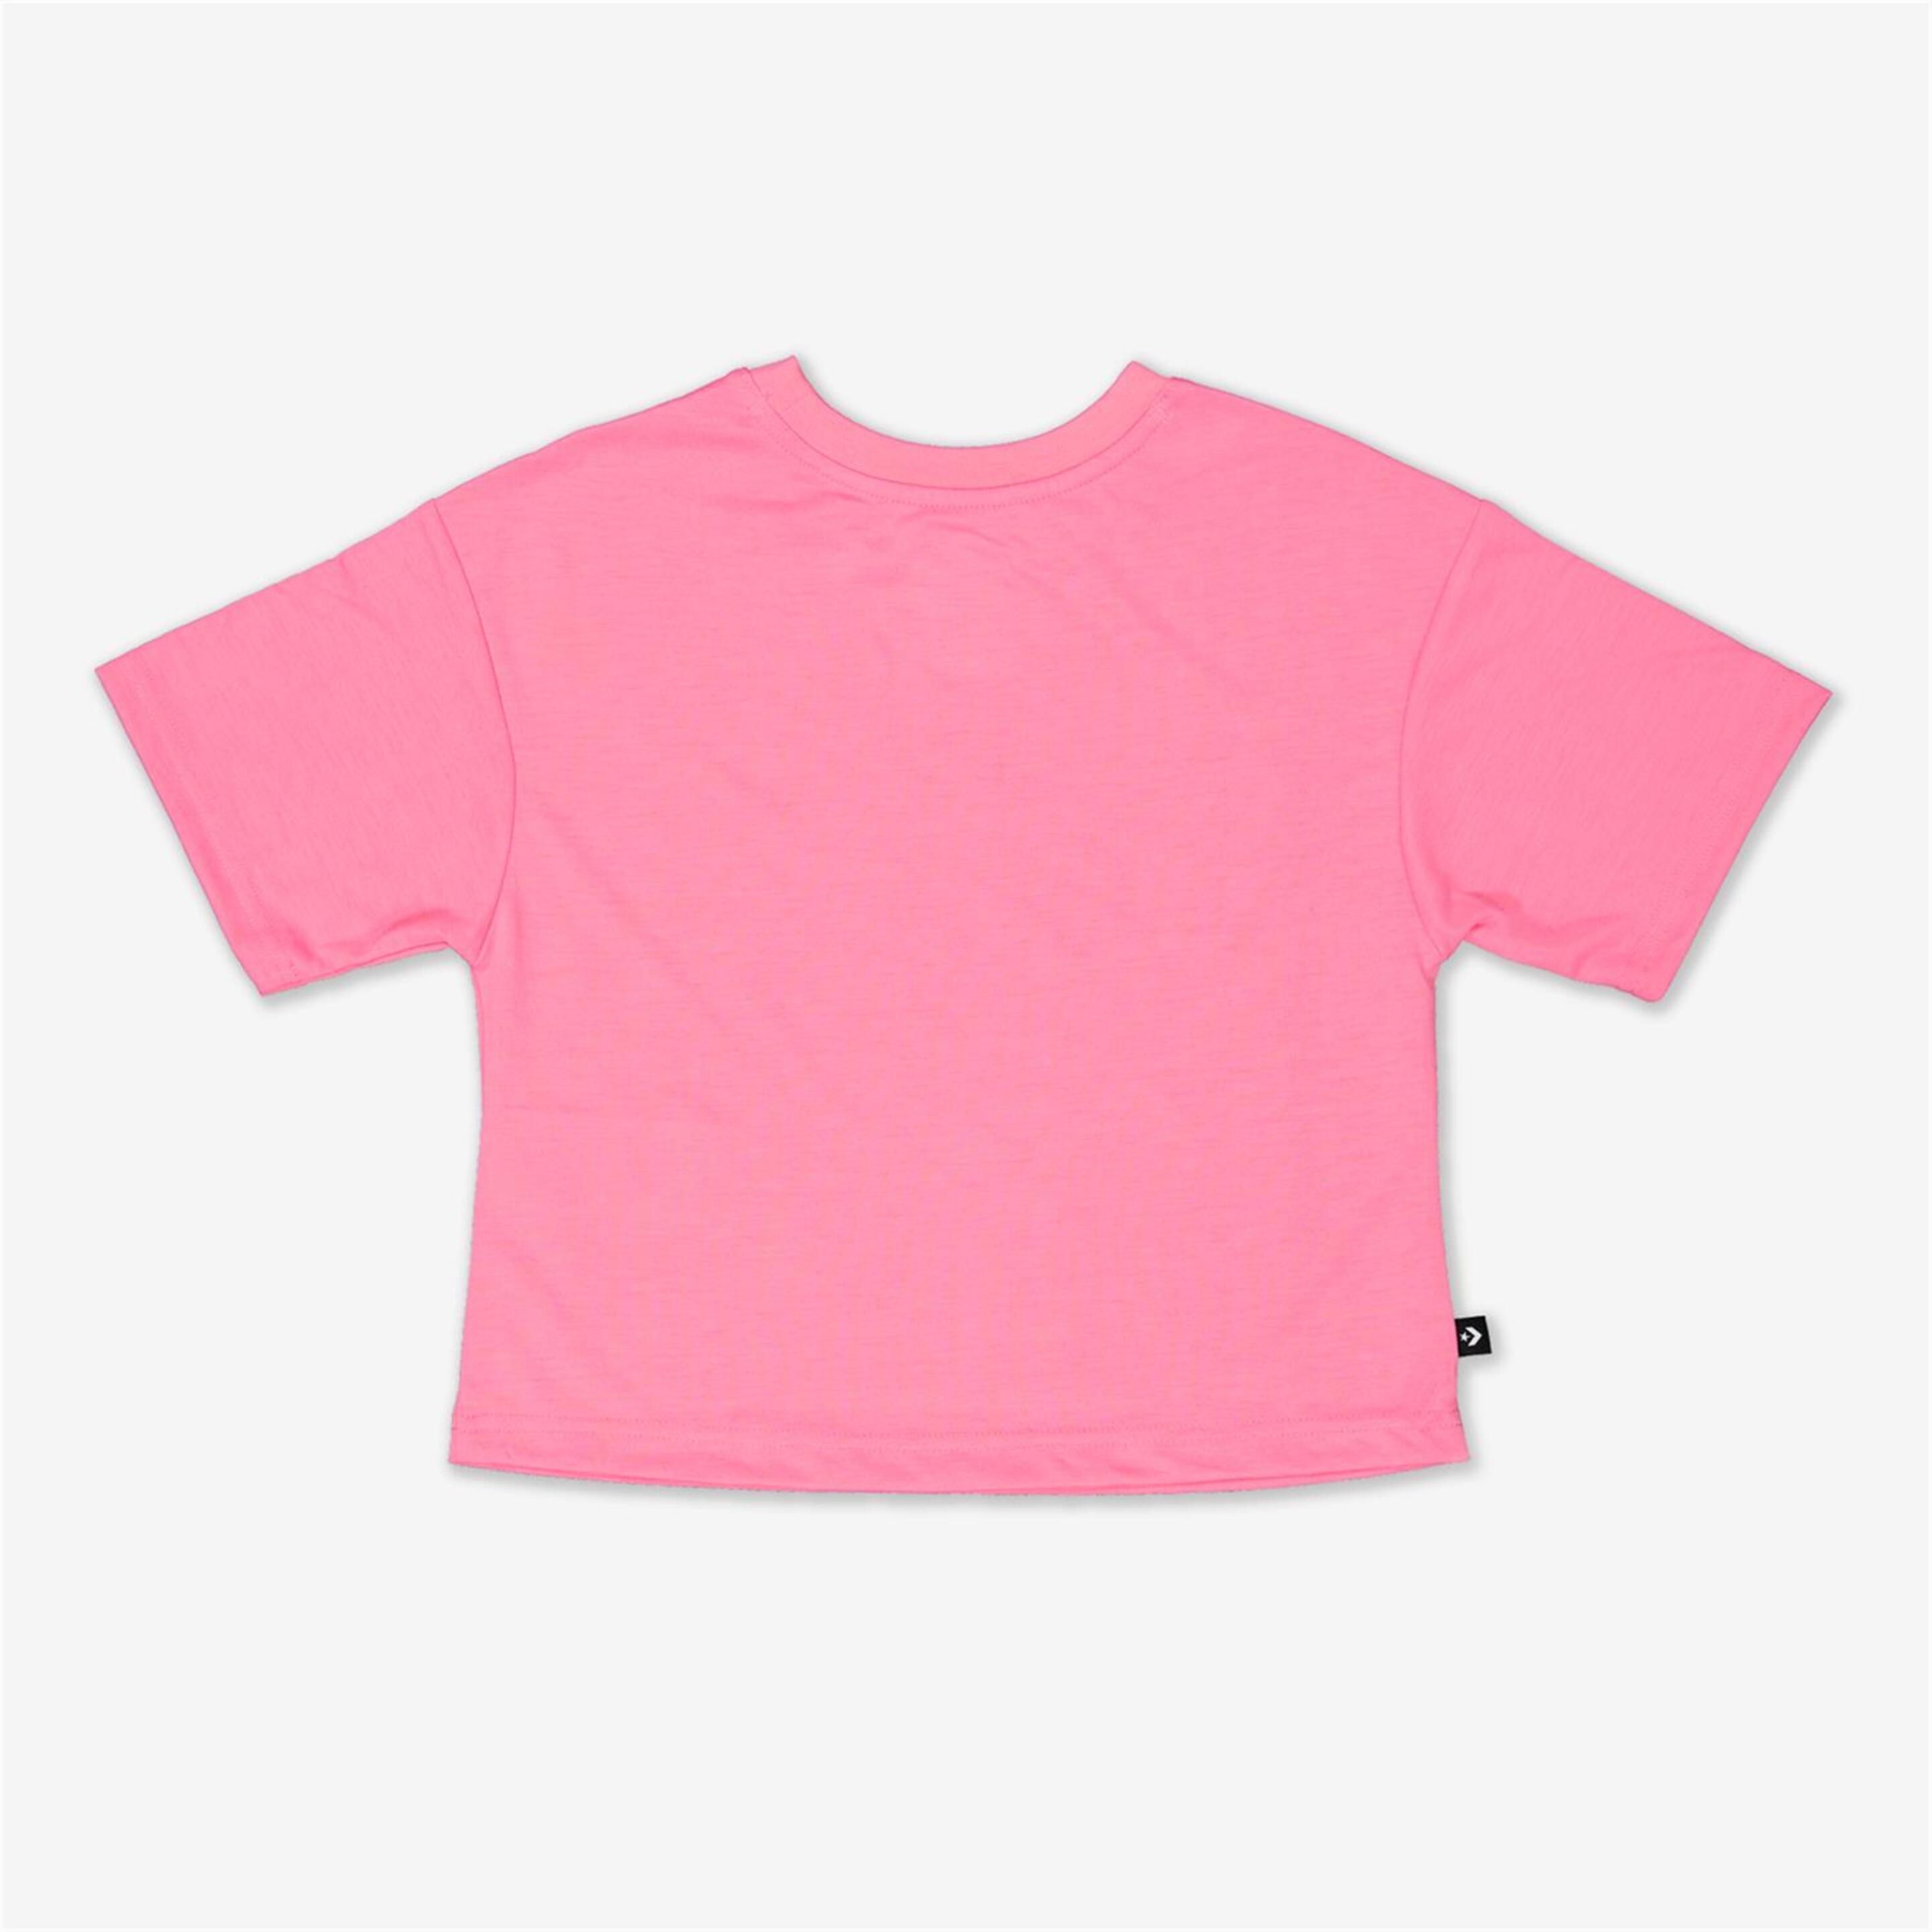 Camiseta Converse - Rosa - Camiseta Boxy Niña